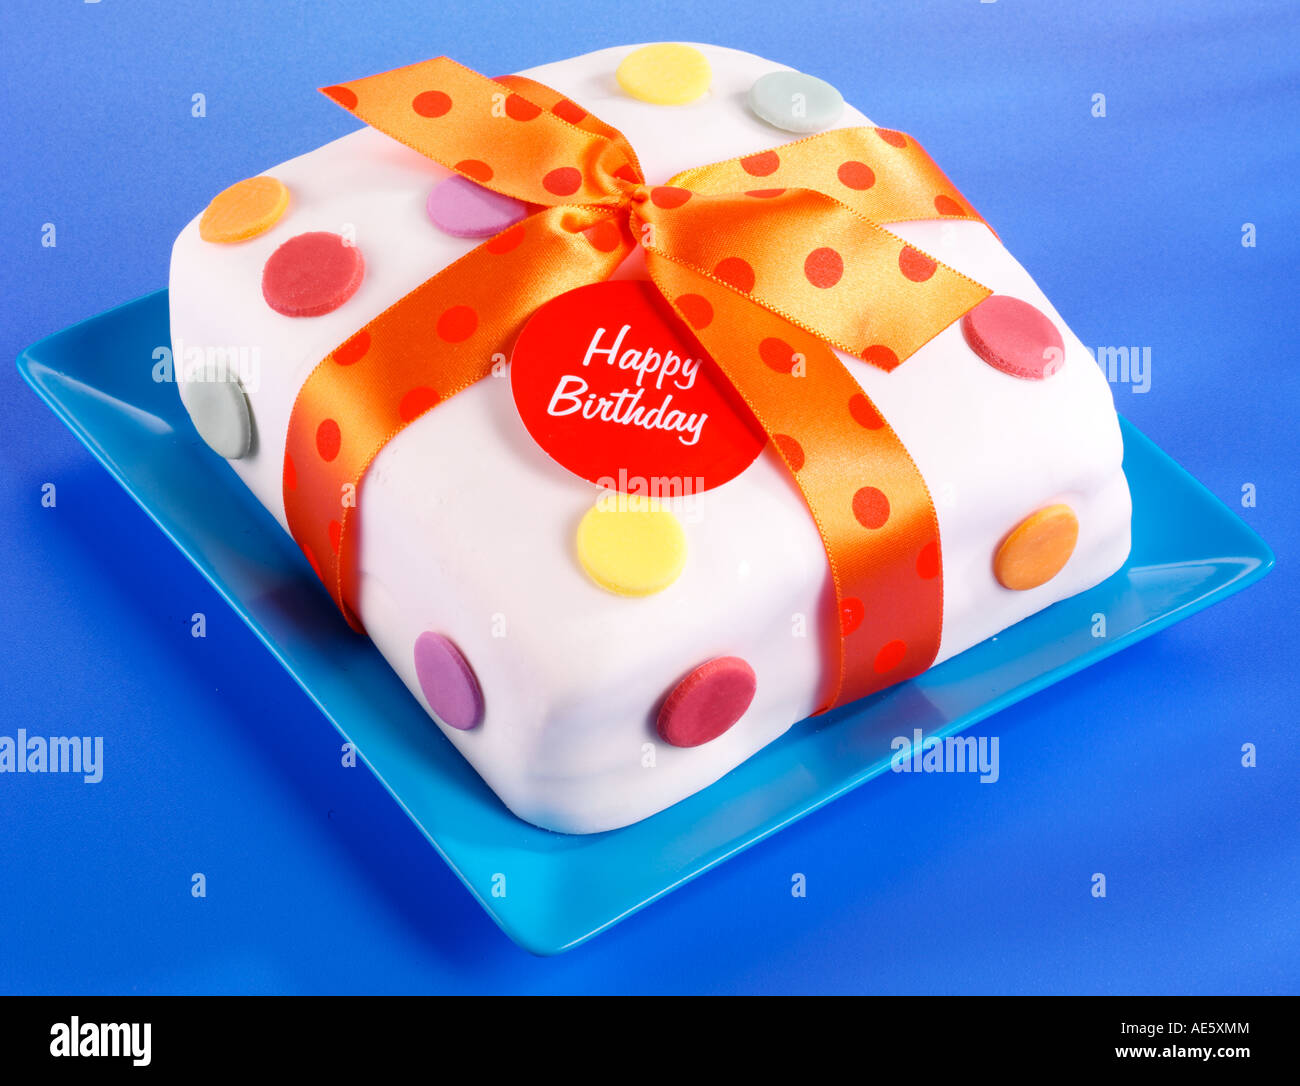 BIRTHDAY CAKE WITH POLKA DOTS Stock Photo